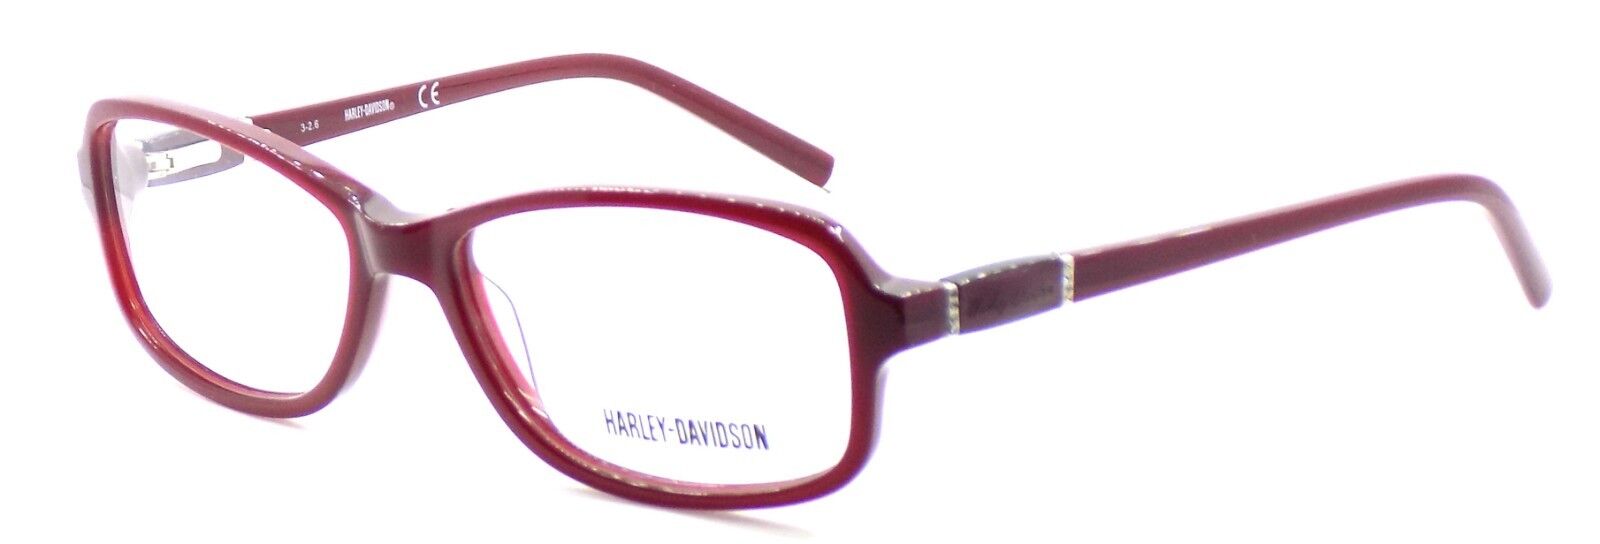 Harley Davidson HD0537 069 Women's Eyeglasses Frames 54-16-135 Shiny Bordeaux